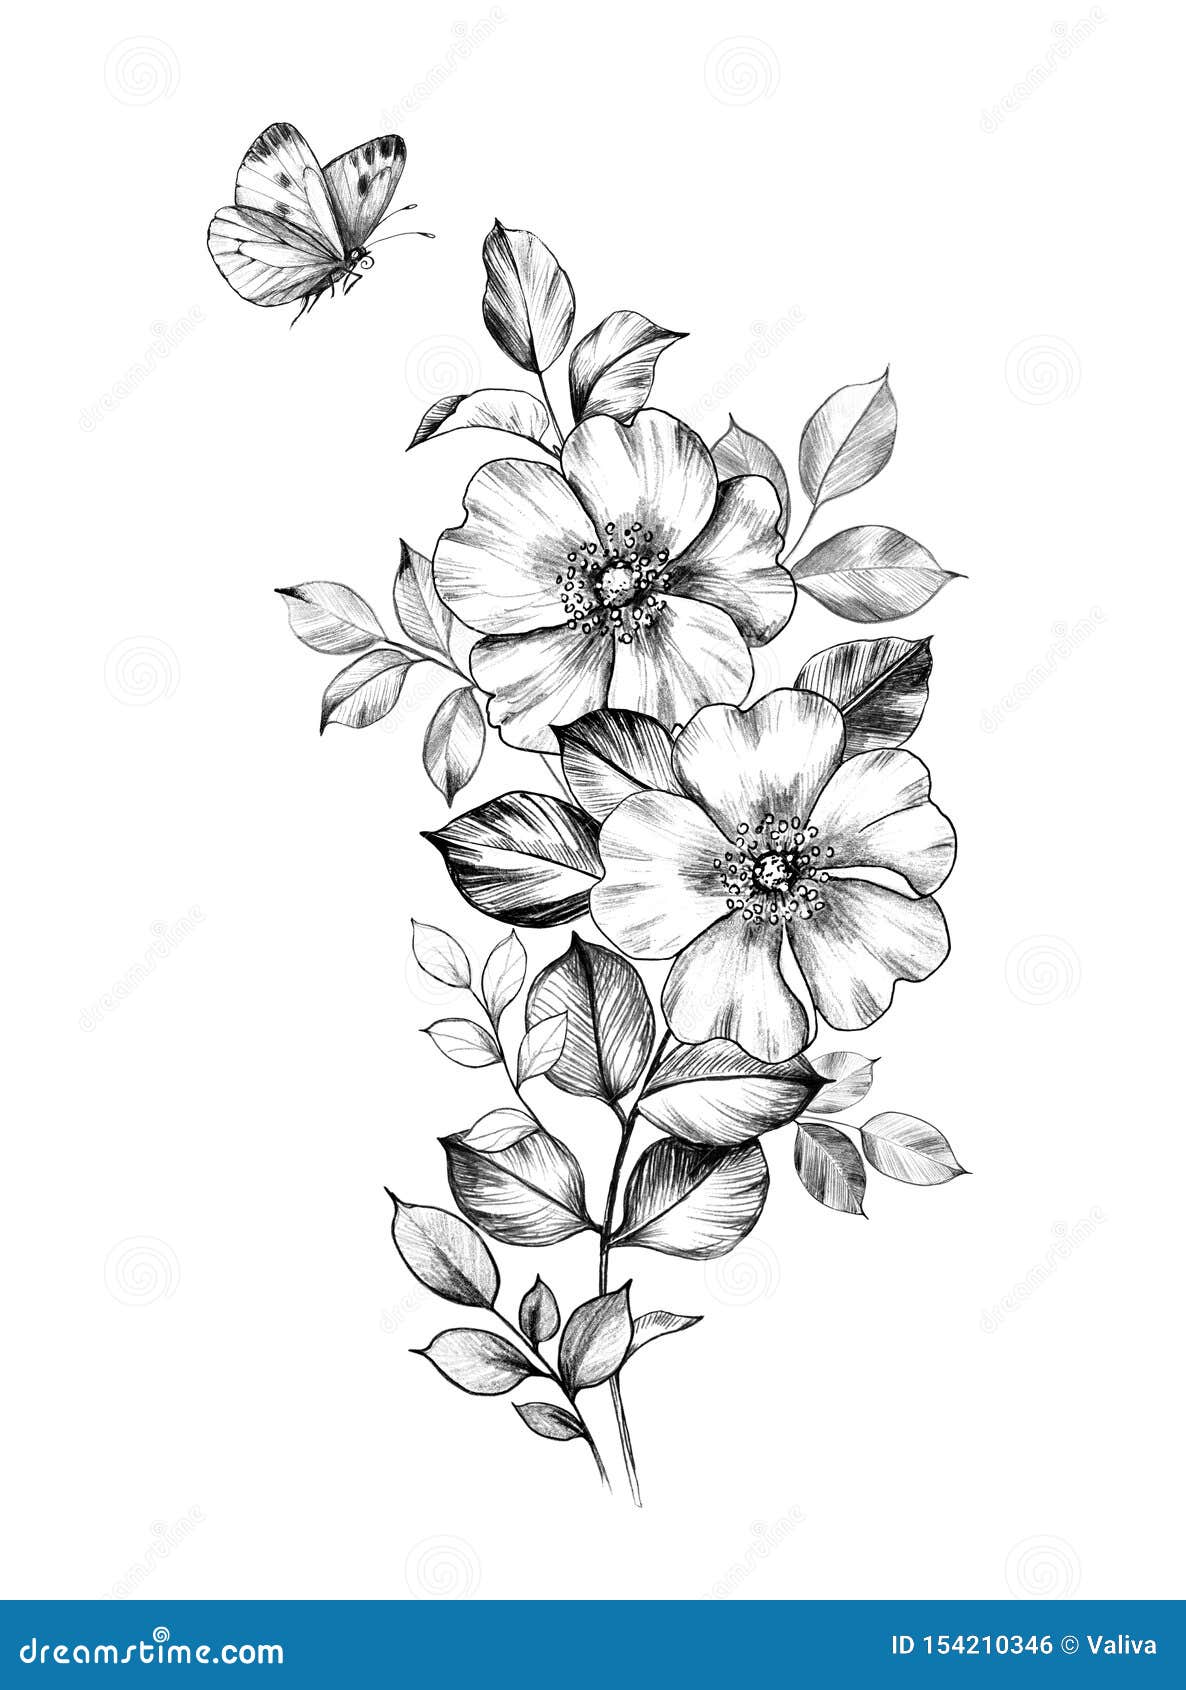 ArtStation - Pencil sketch of a flower